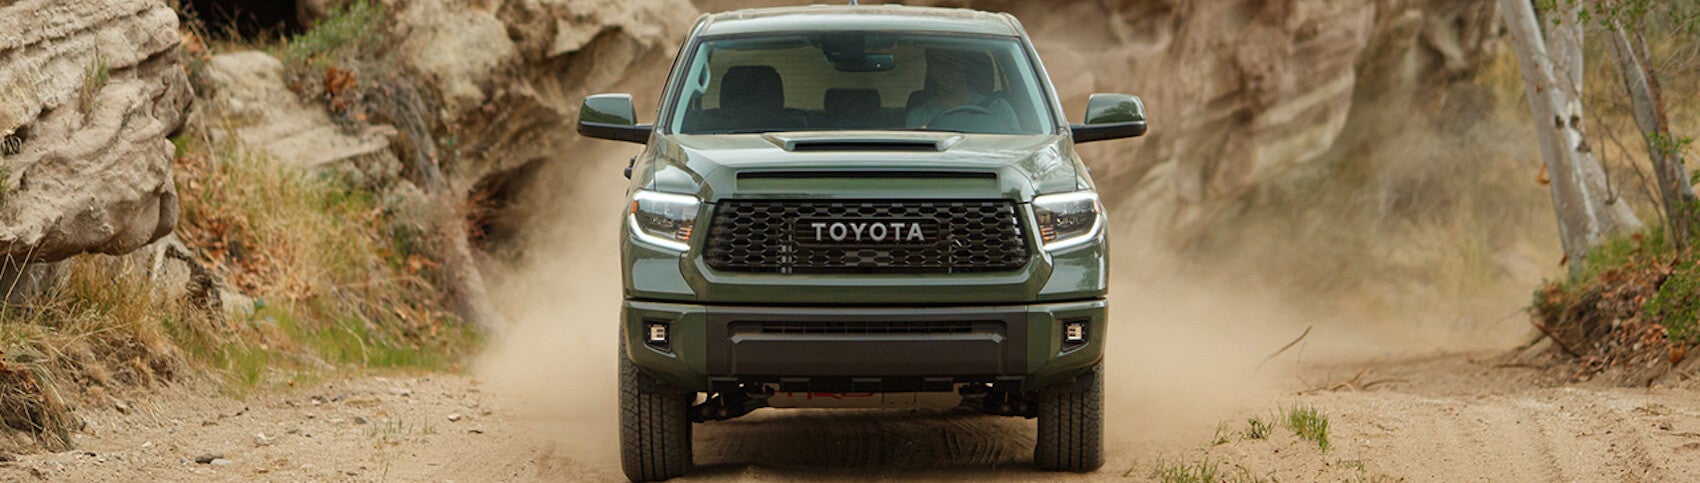 Toyota Tundra for Sale near Avon IN